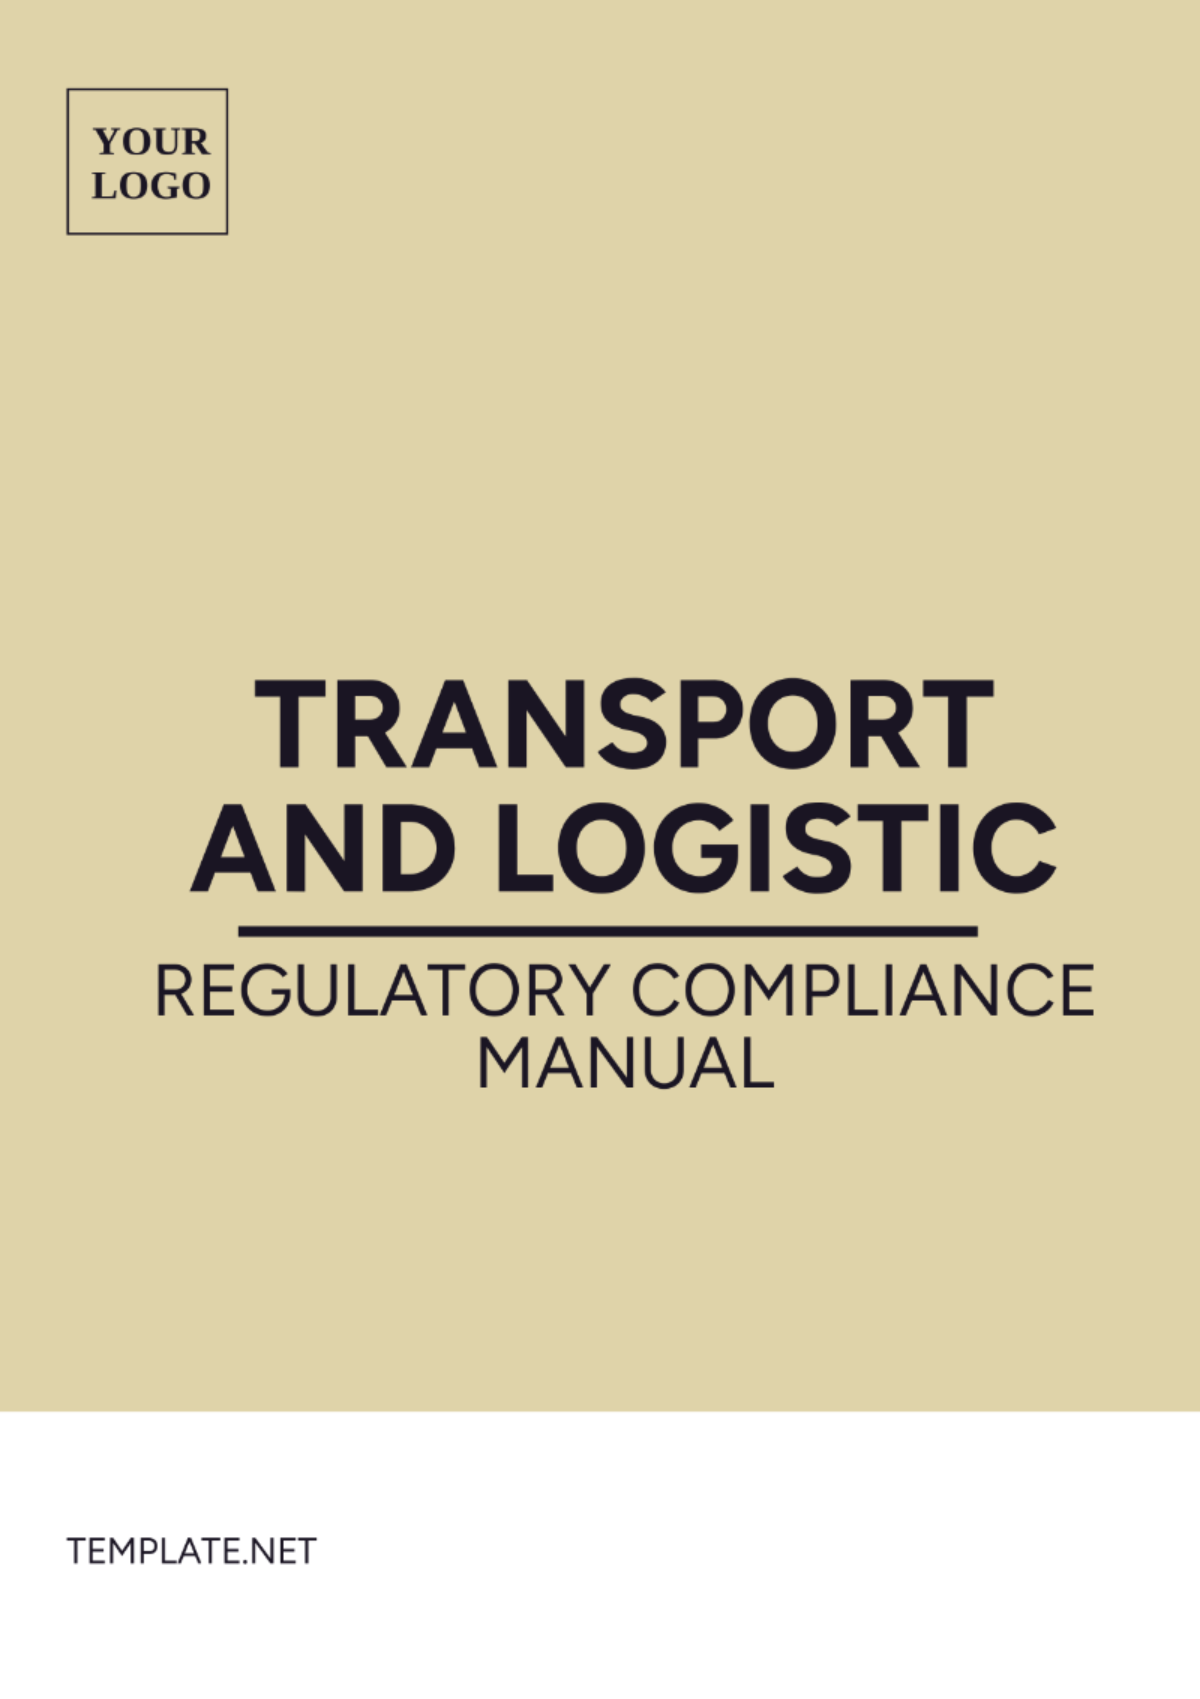 Transport And Logistics Regulatory Compliance Manual Template